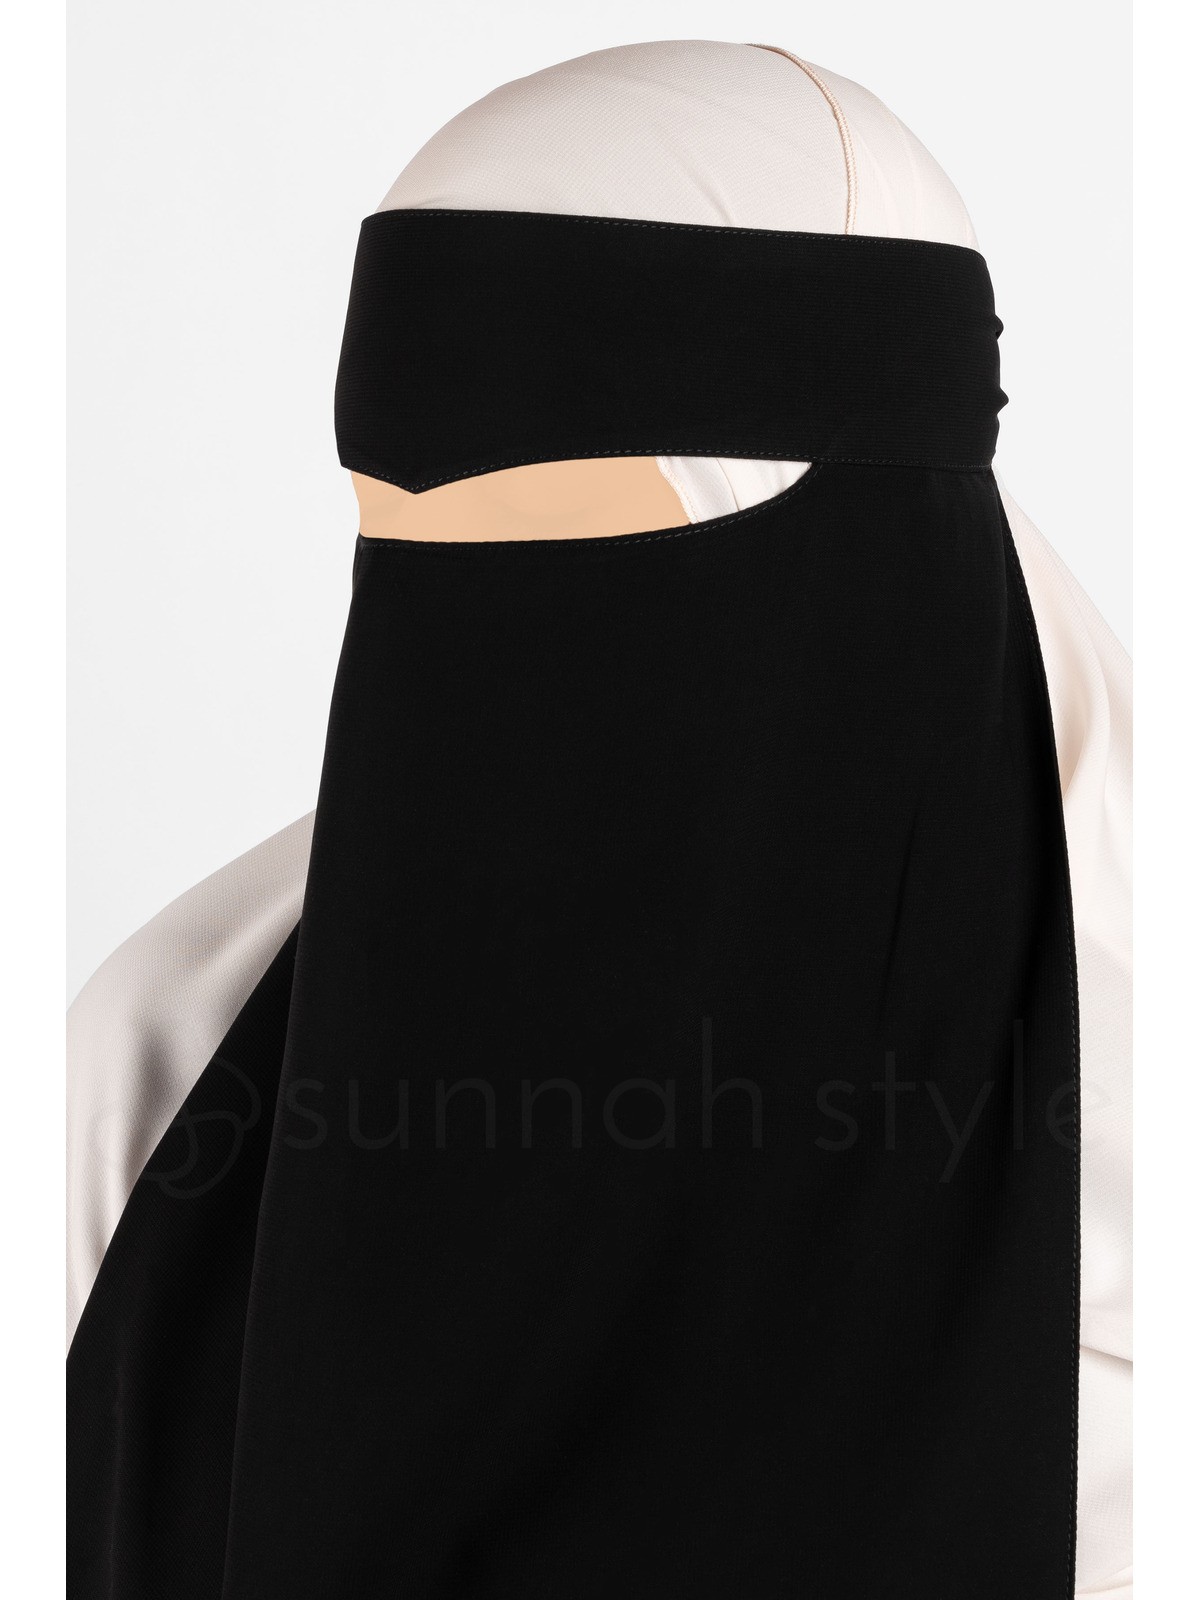 Sunnah Style - Long One Layer Widow's Peak Niqab (Black)